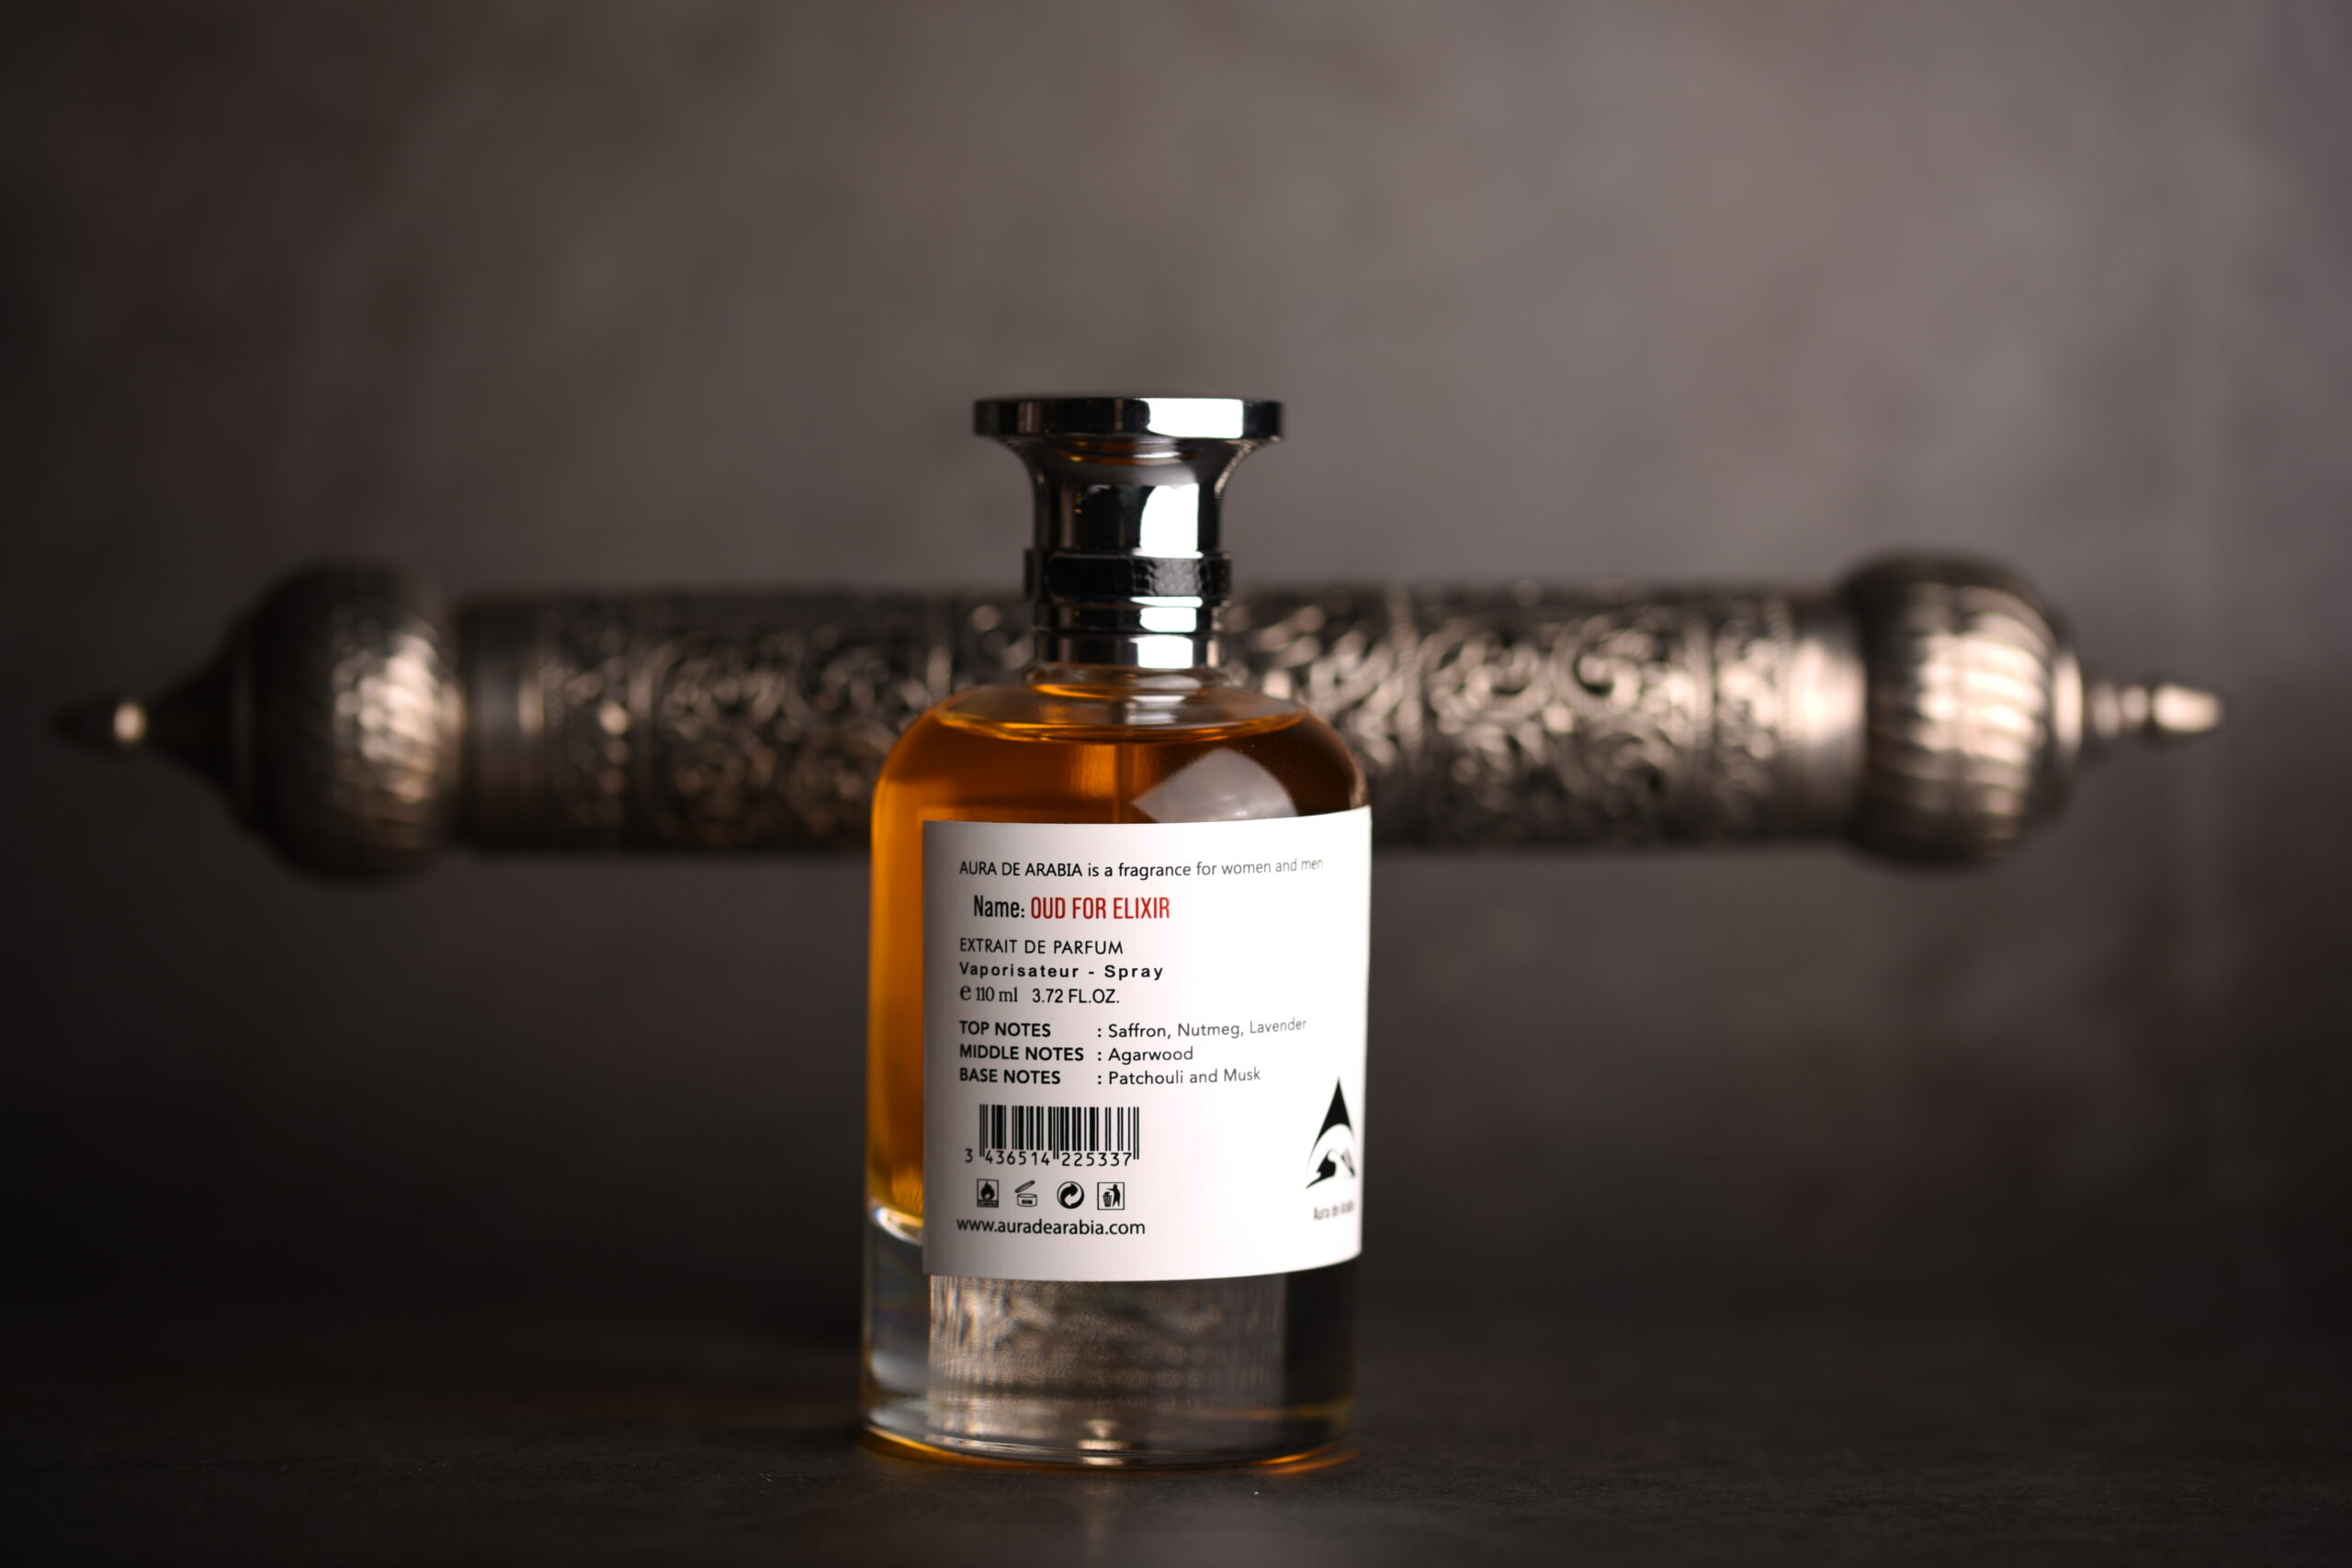 Oud elixir perfume by Aura de arabia